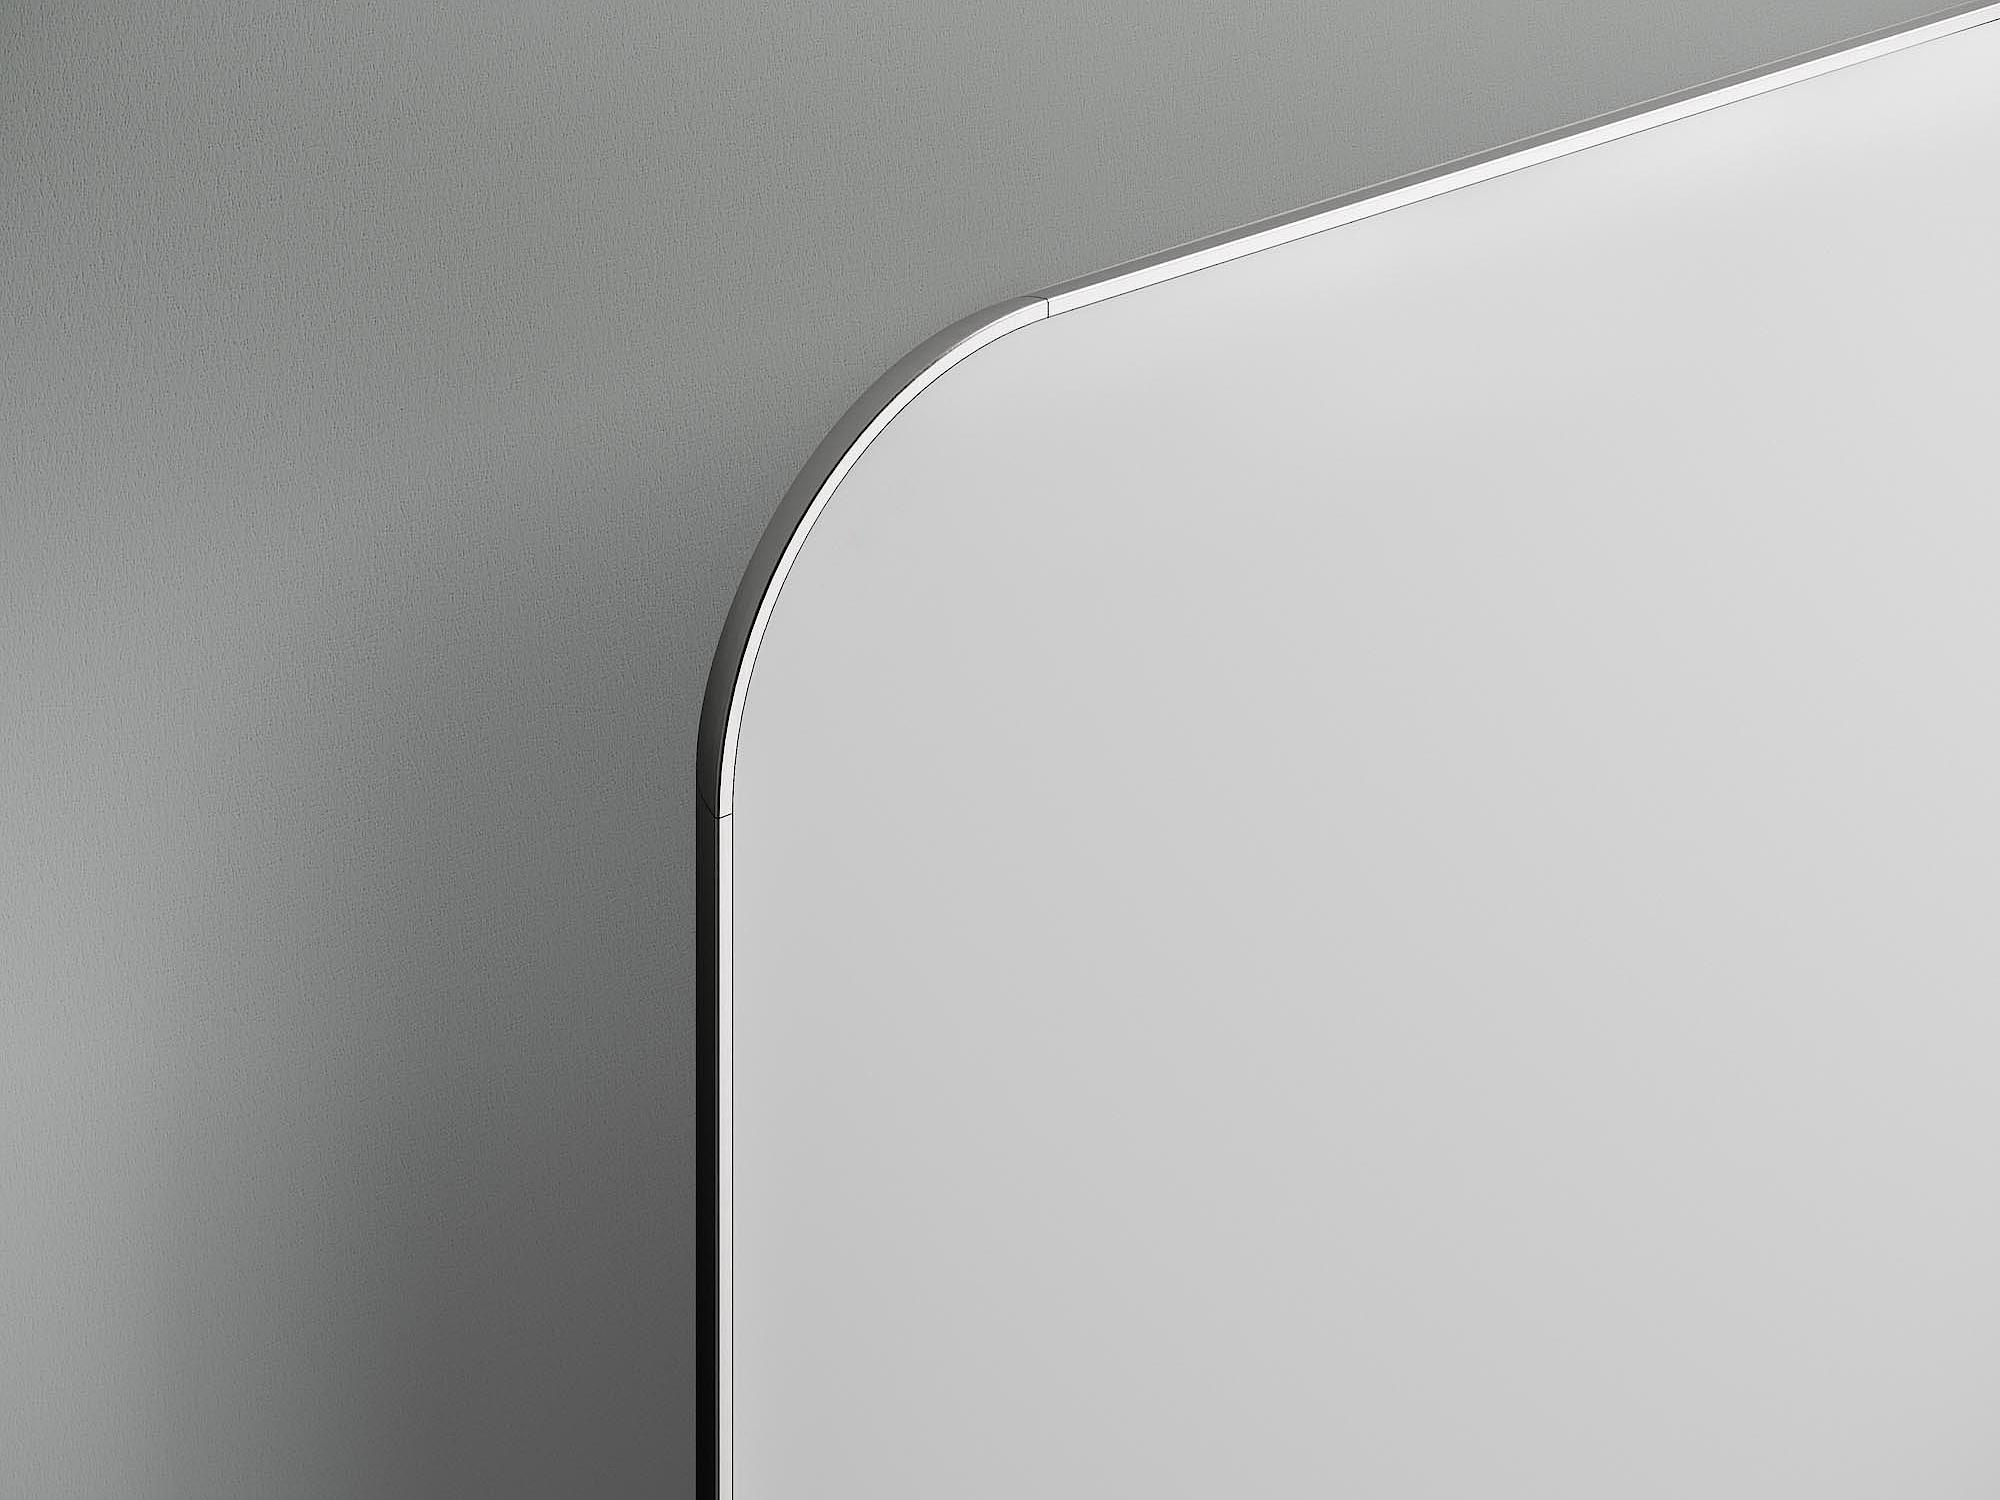 Kermi Elveo design and bathroom radiators with White glass front and Aluminium frame.